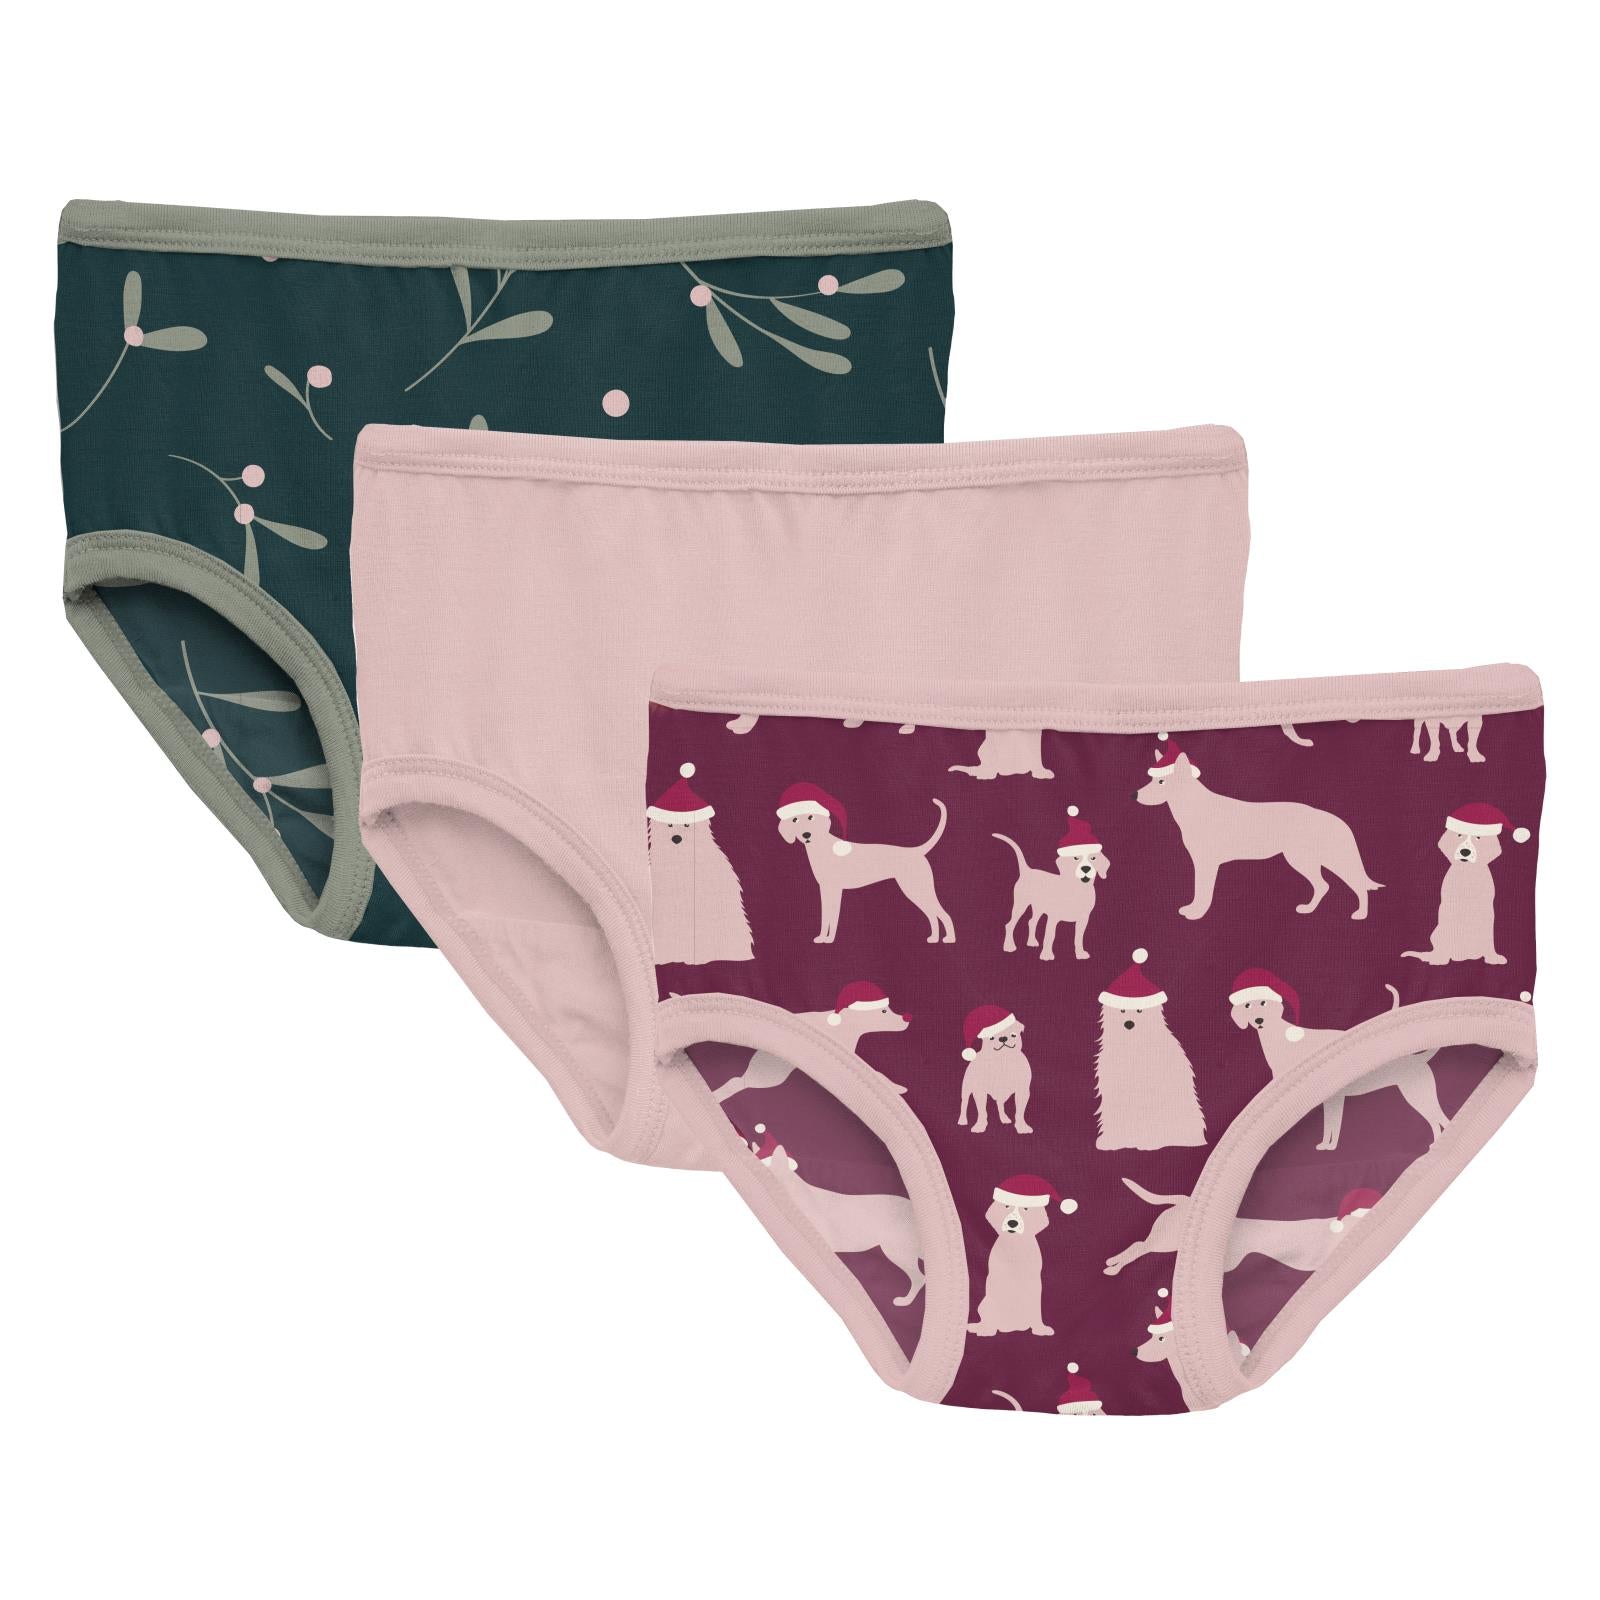 Print Girl's Underwear Set of 3 in Pine Mistletoe, Baby Rose & Melody Santa  Dogs